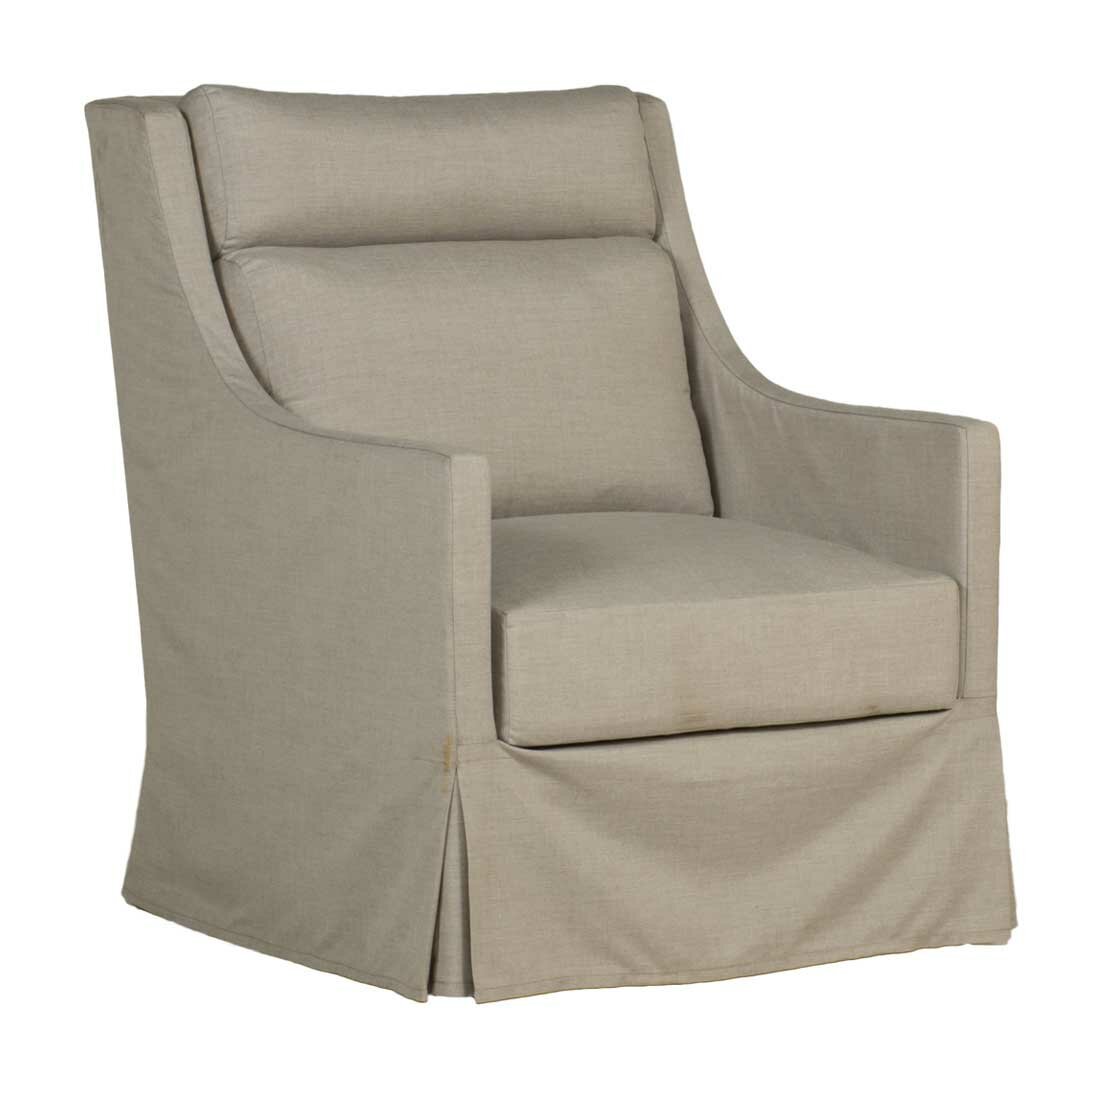 helena swivel glider chair with cushions